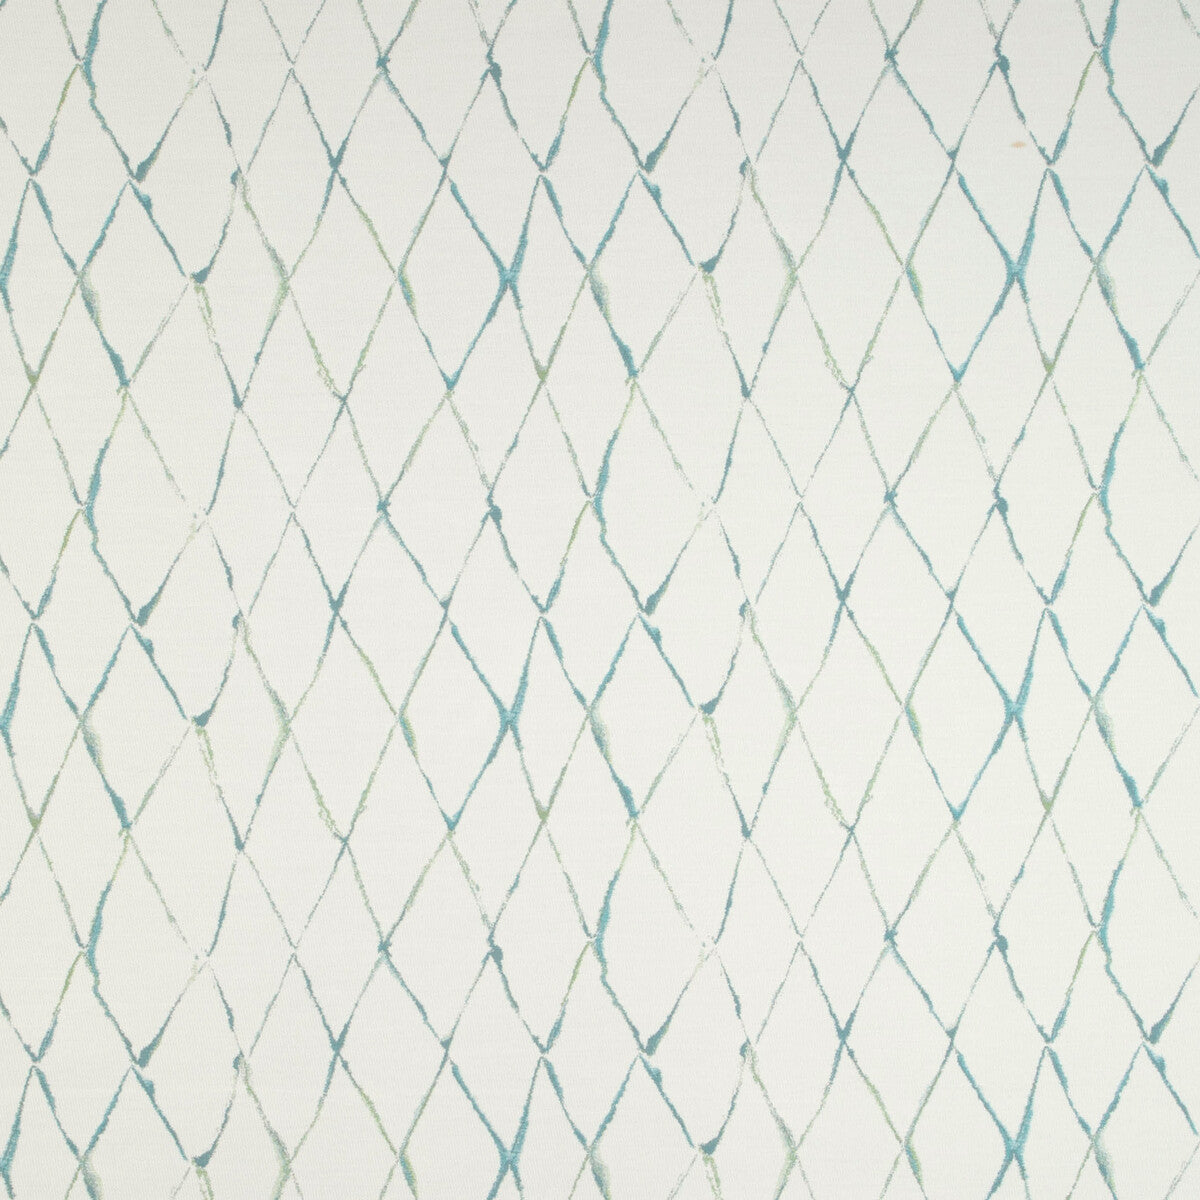 Kravet Design fabric in 36773-35 color - pattern 36773.35.0 - by Kravet Design in the Sea Island Indoor/Outdoor collection